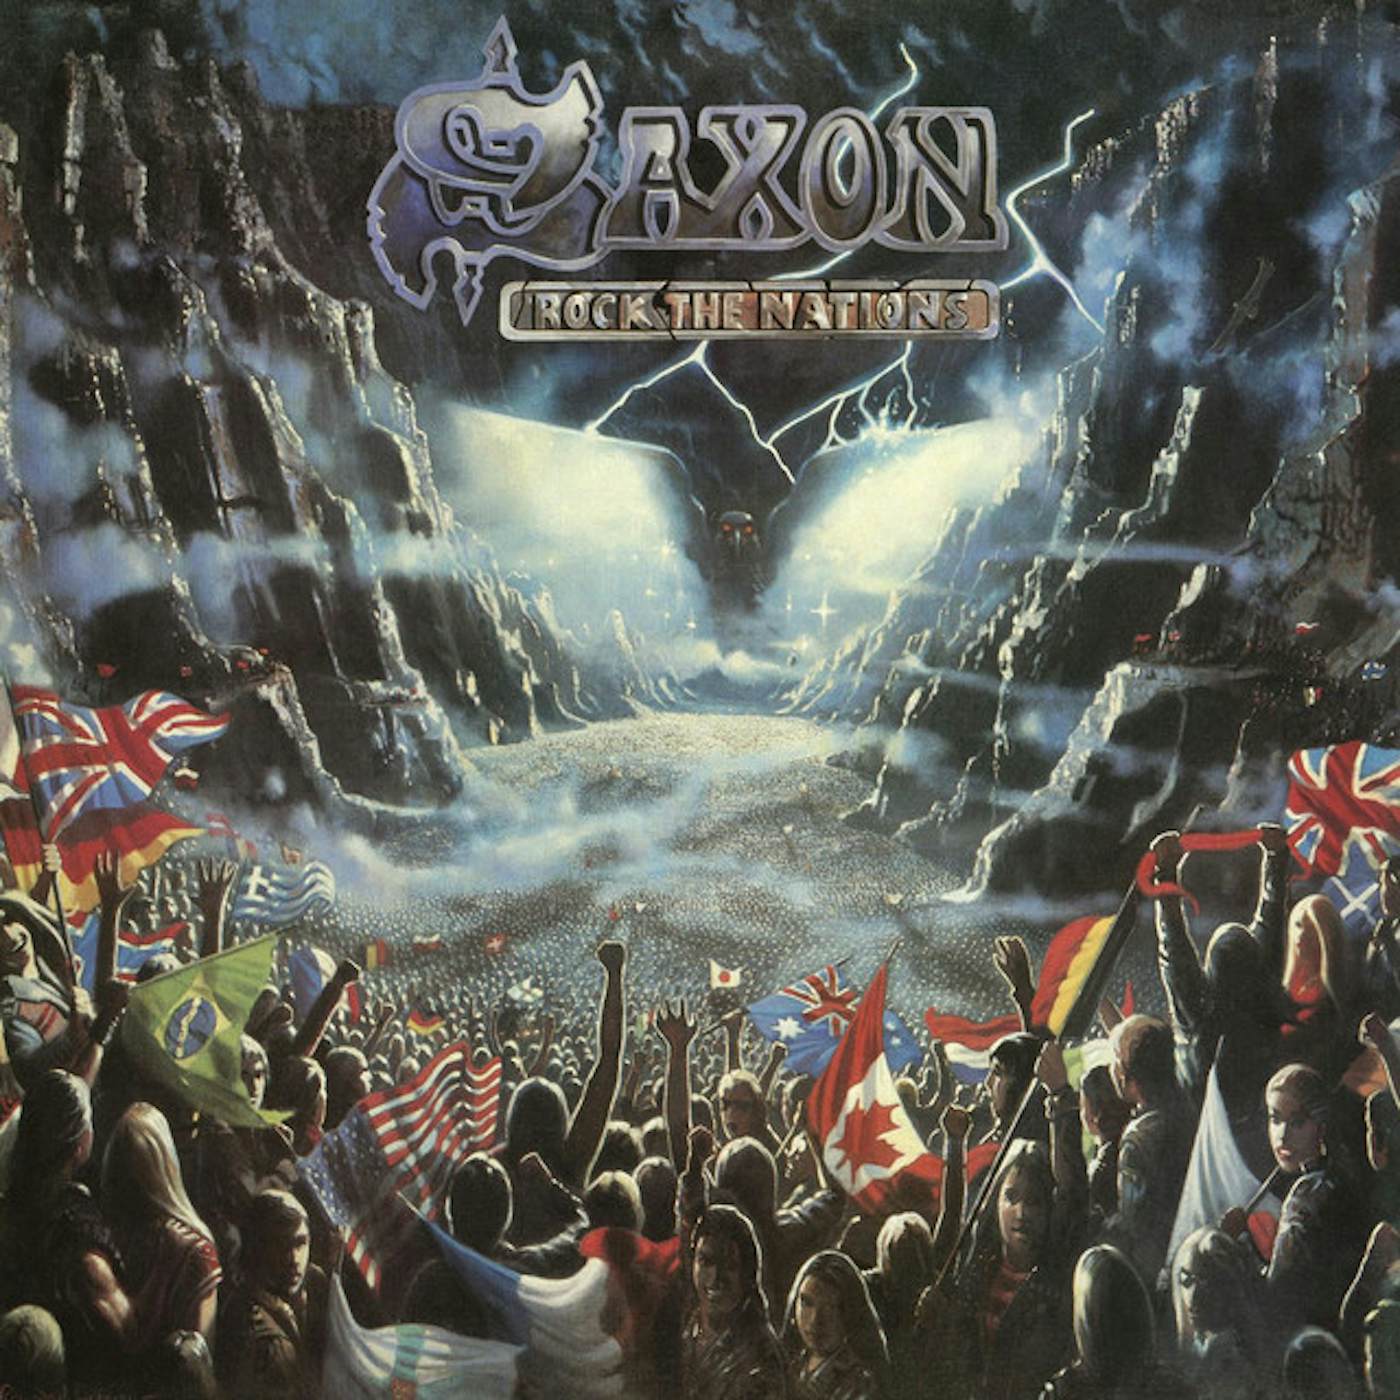 Saxon Rock the Nations Vinyl Record